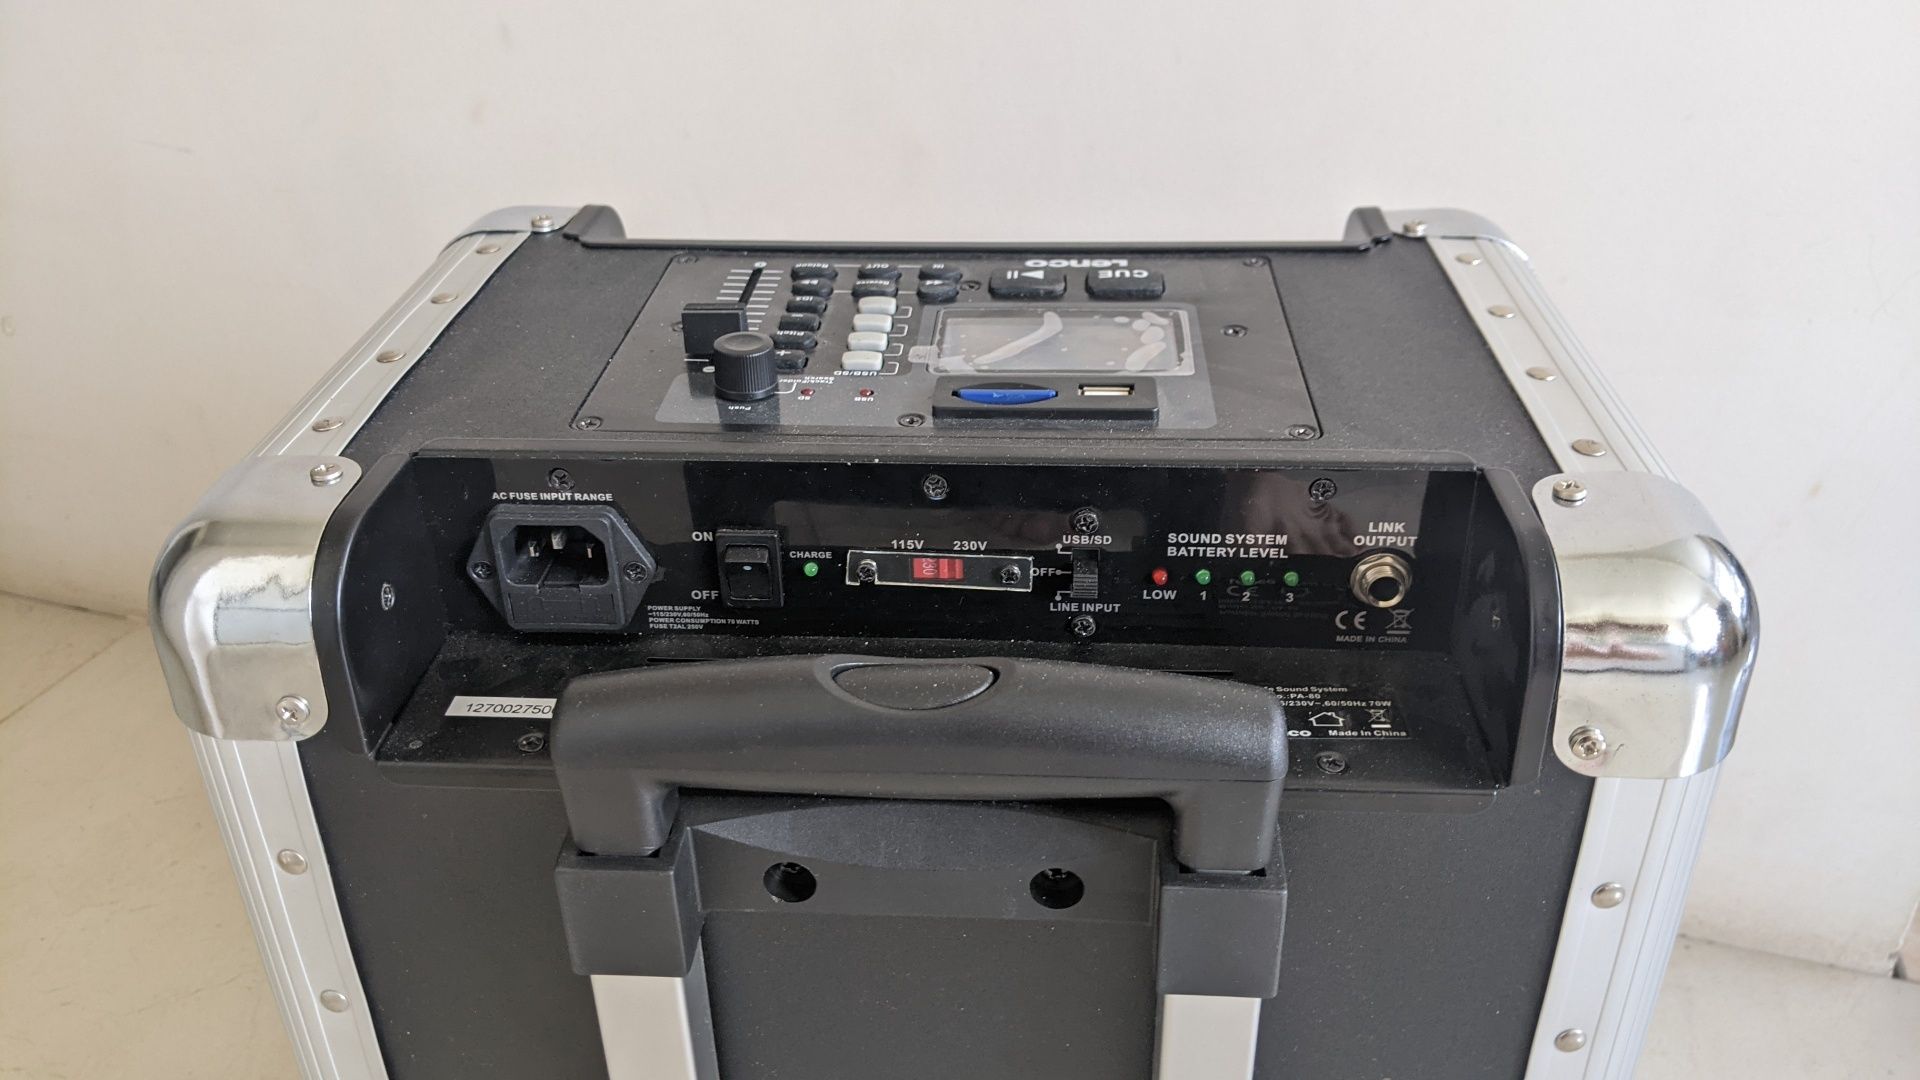 Lenco pa-80 portable Soundsystem with USB and SD card slot